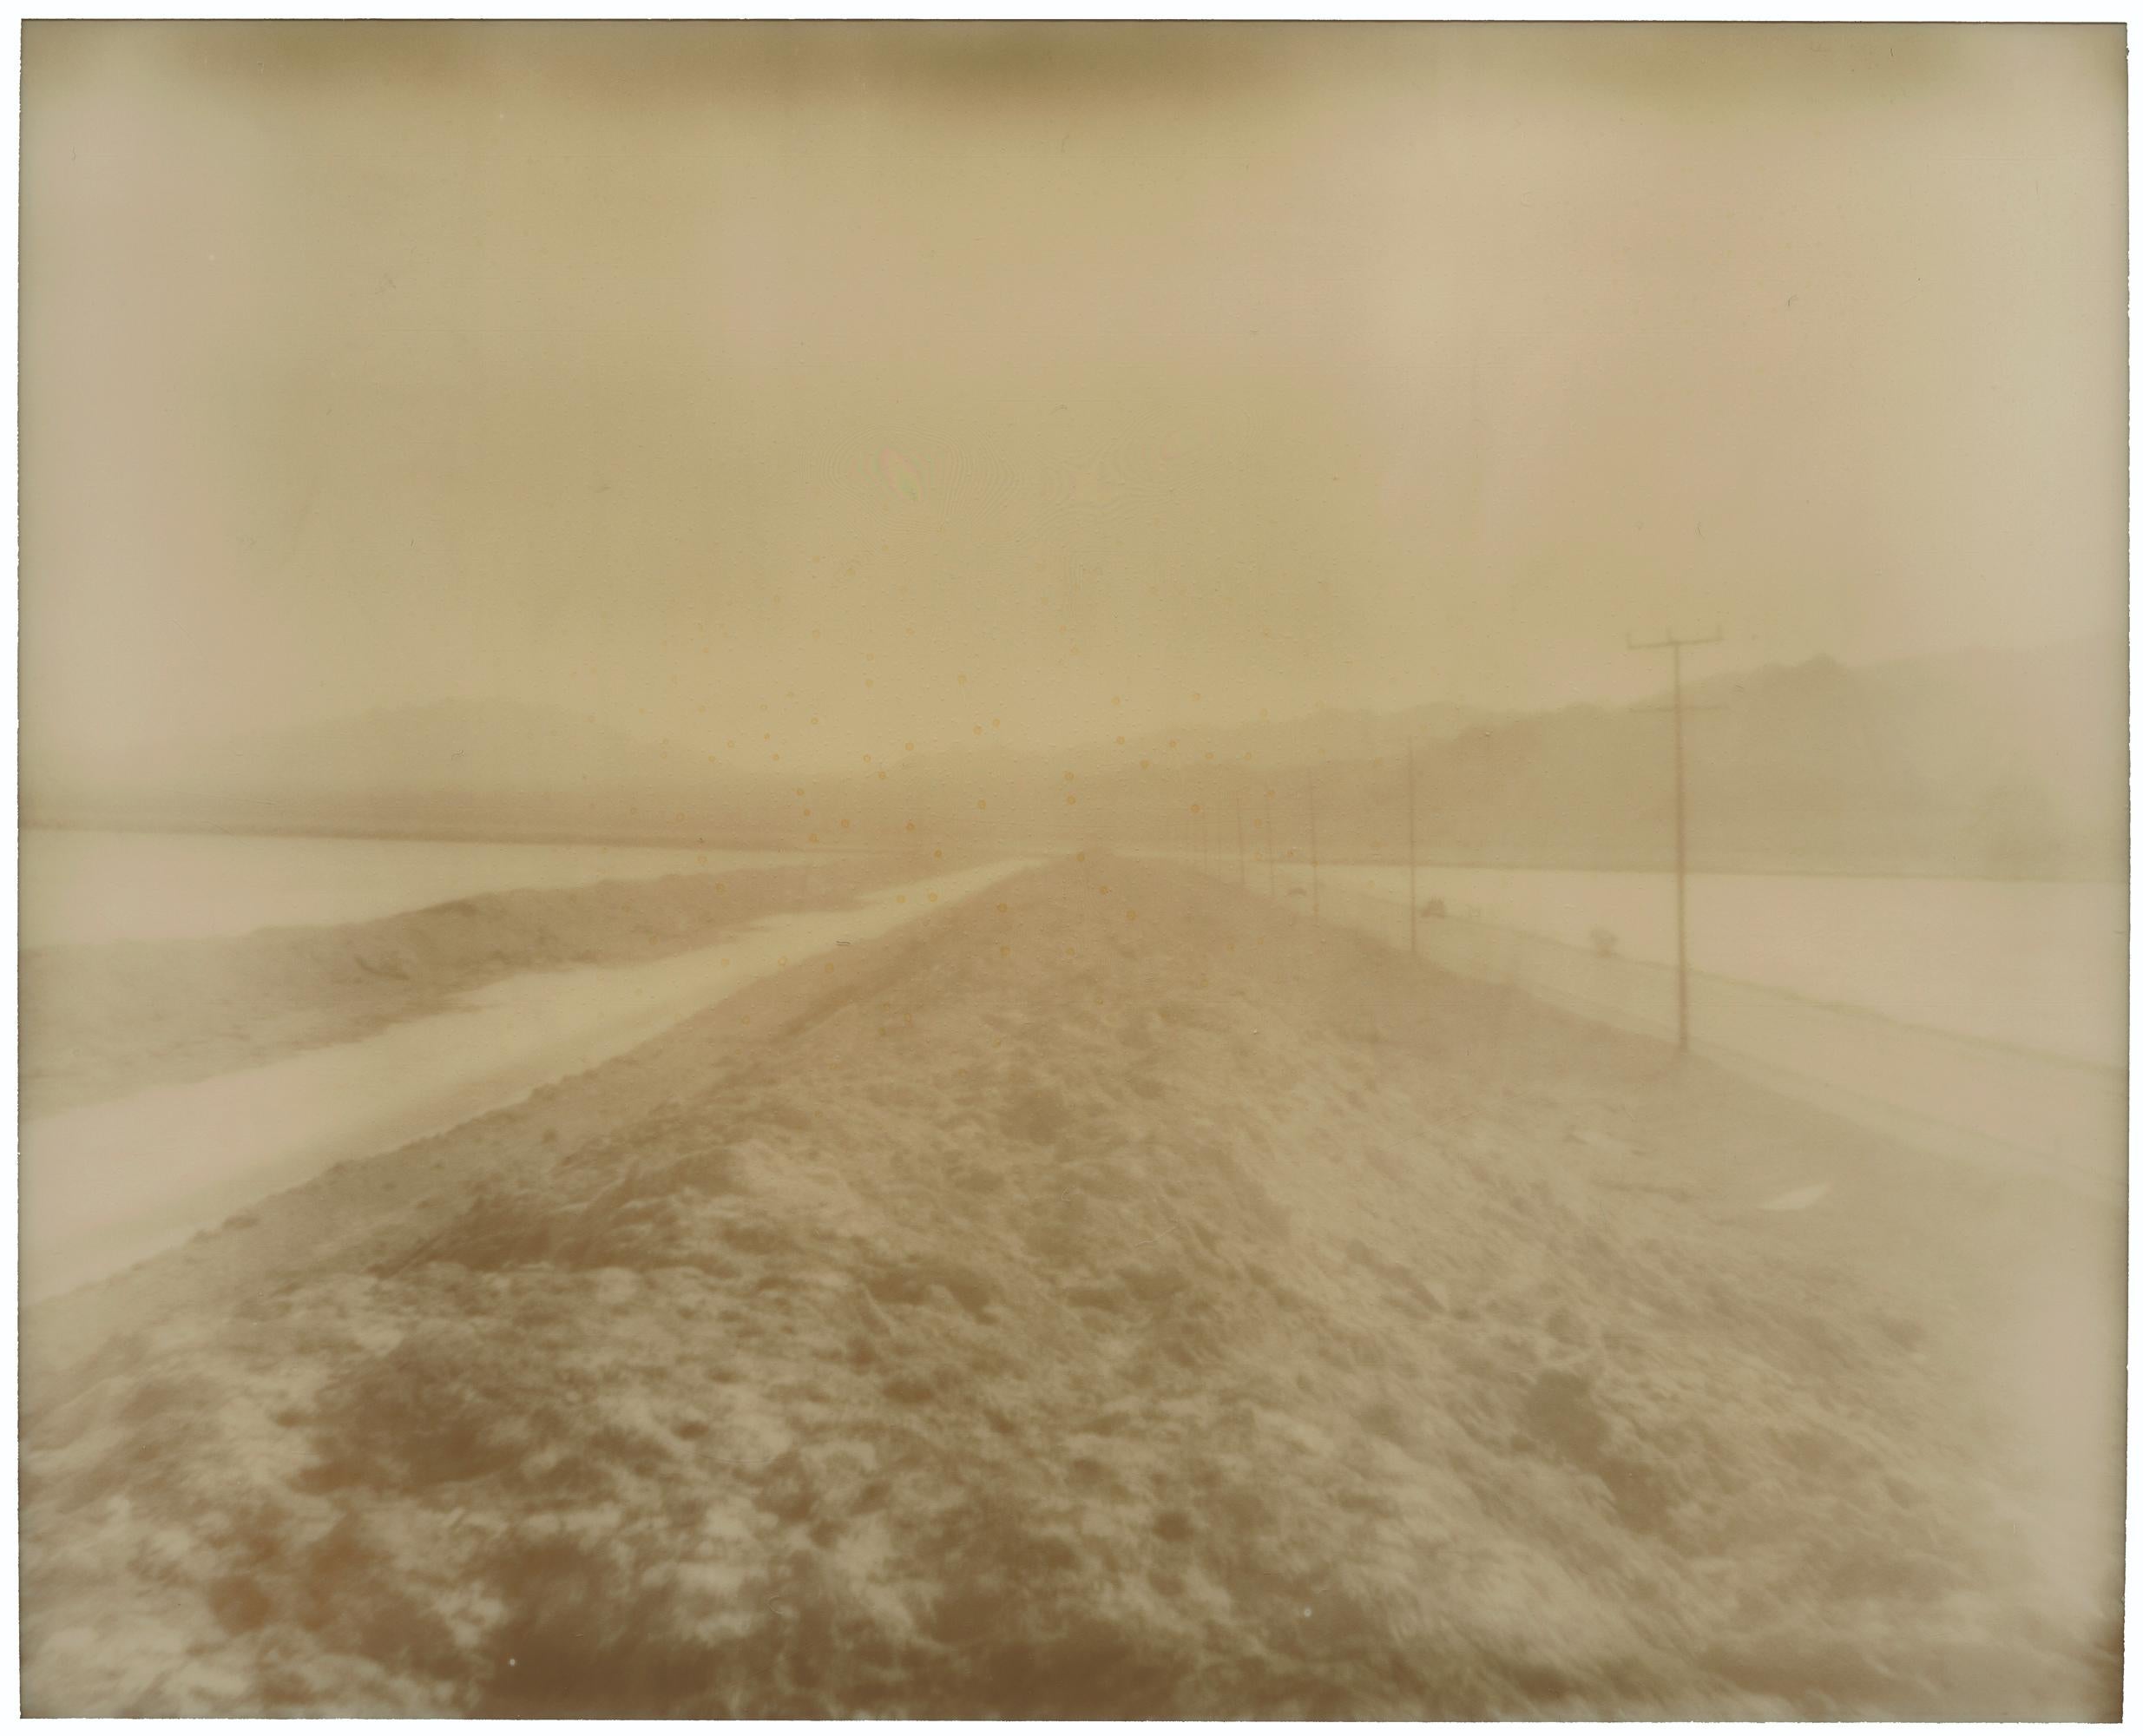 Stefanie Schneider Black and White Photograph - Amboy Salt Flats (California Badlands) - Contemporary, Polaroid, Landscape